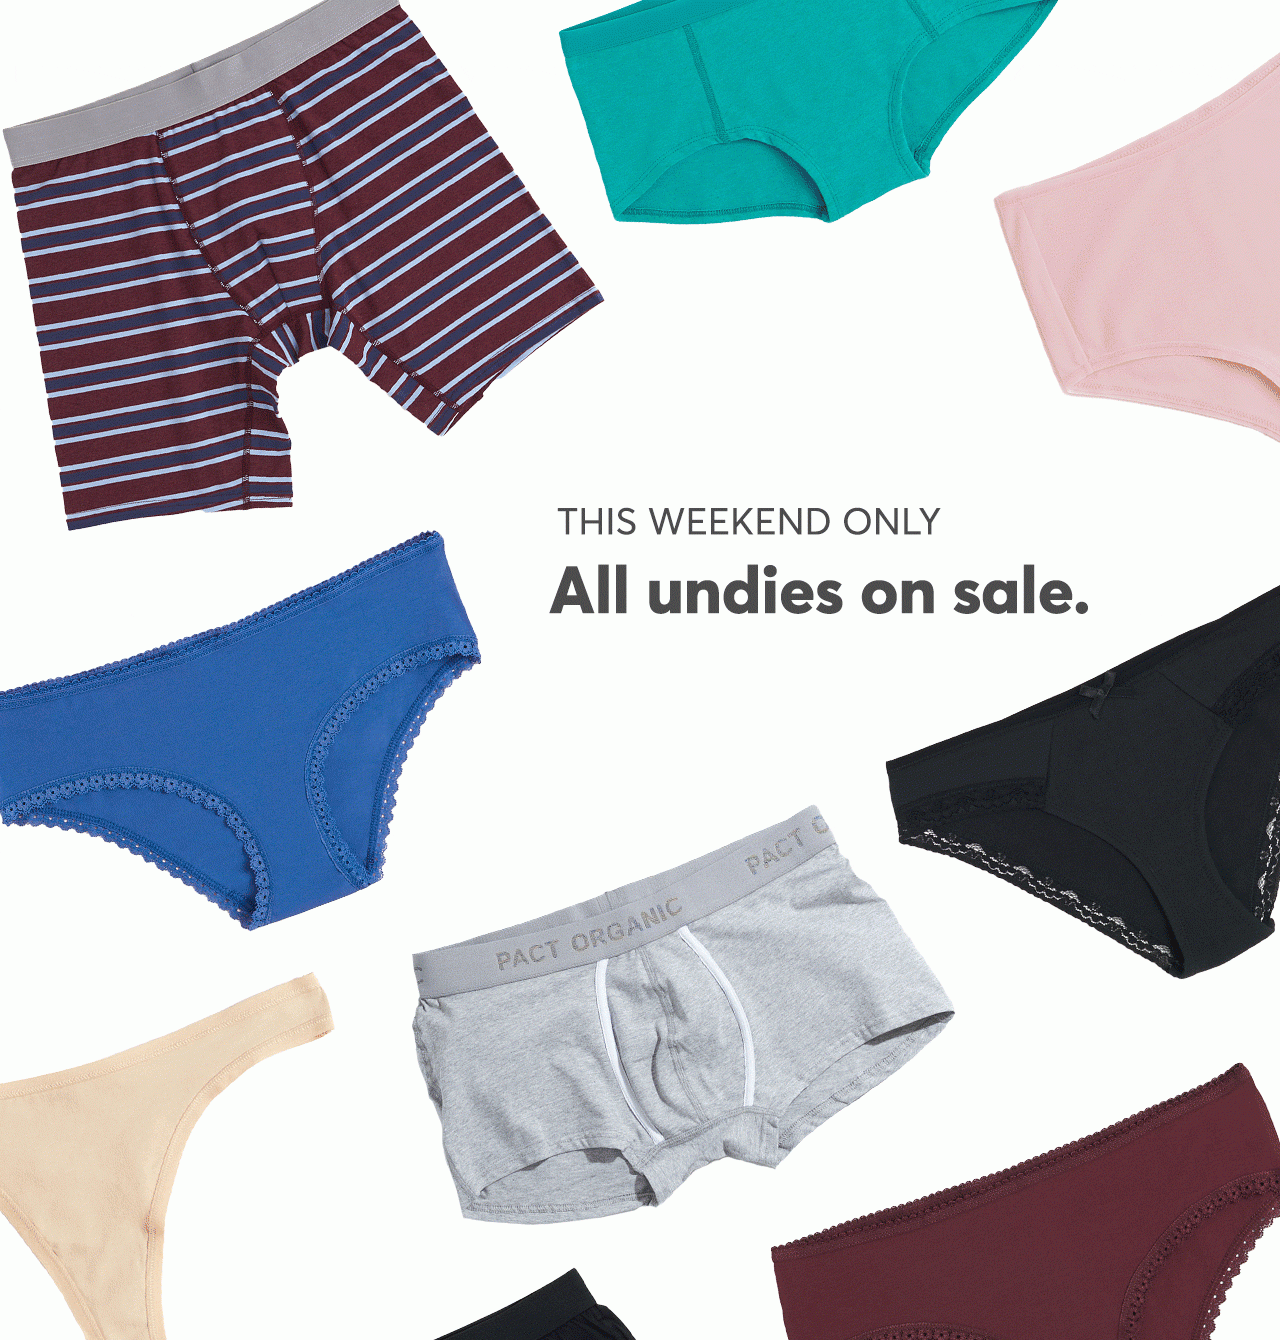 All undies are on sale!